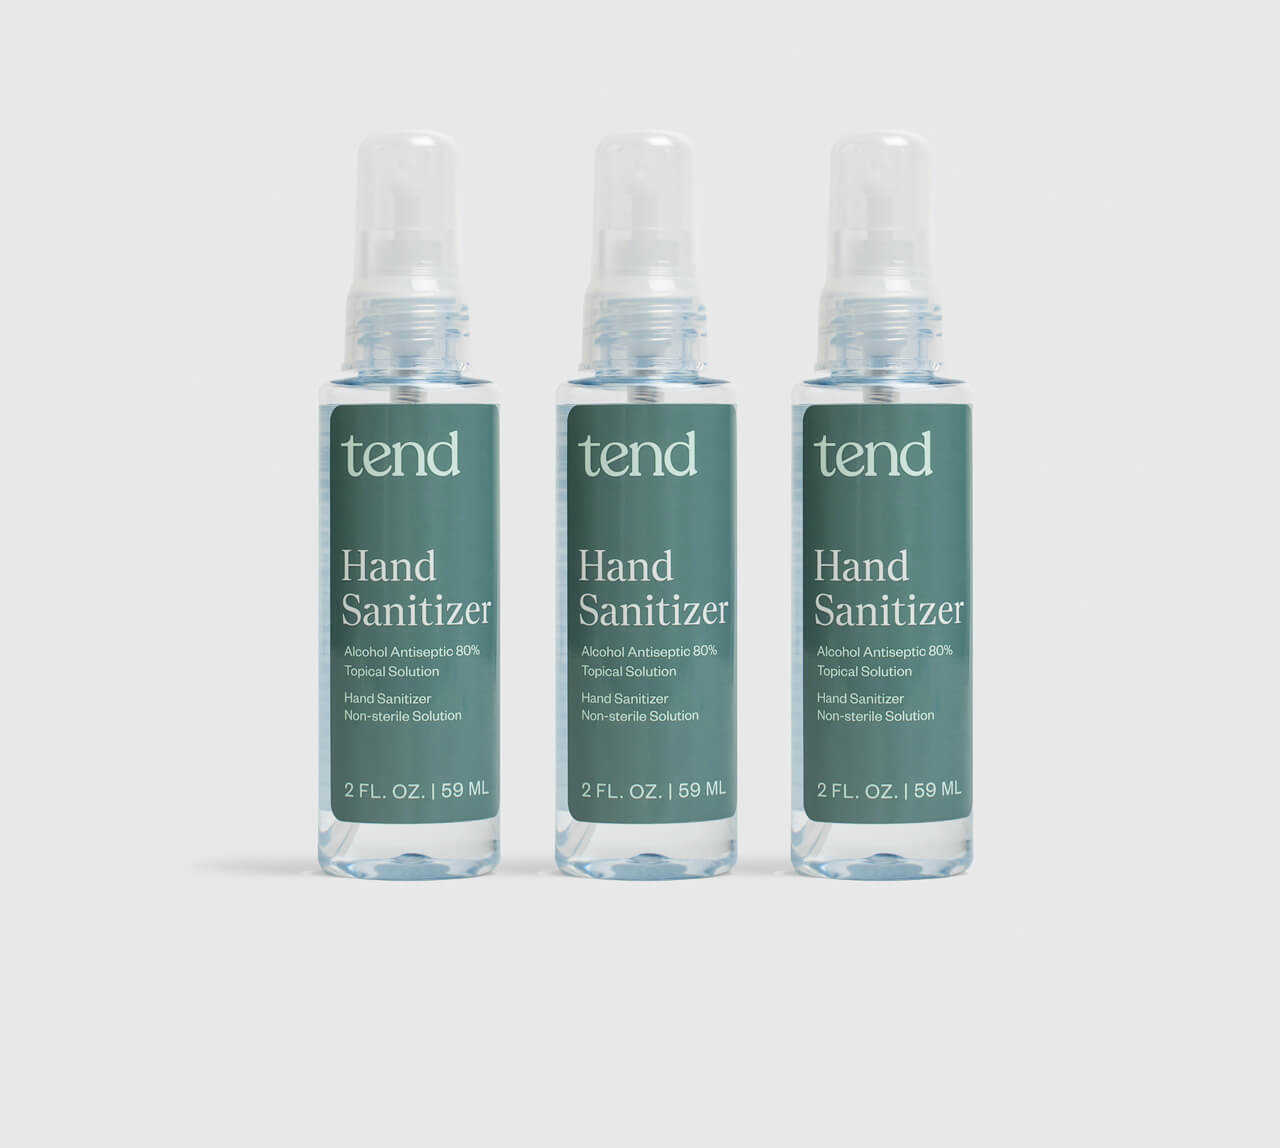 Three bottles of Tend hand sanitizer